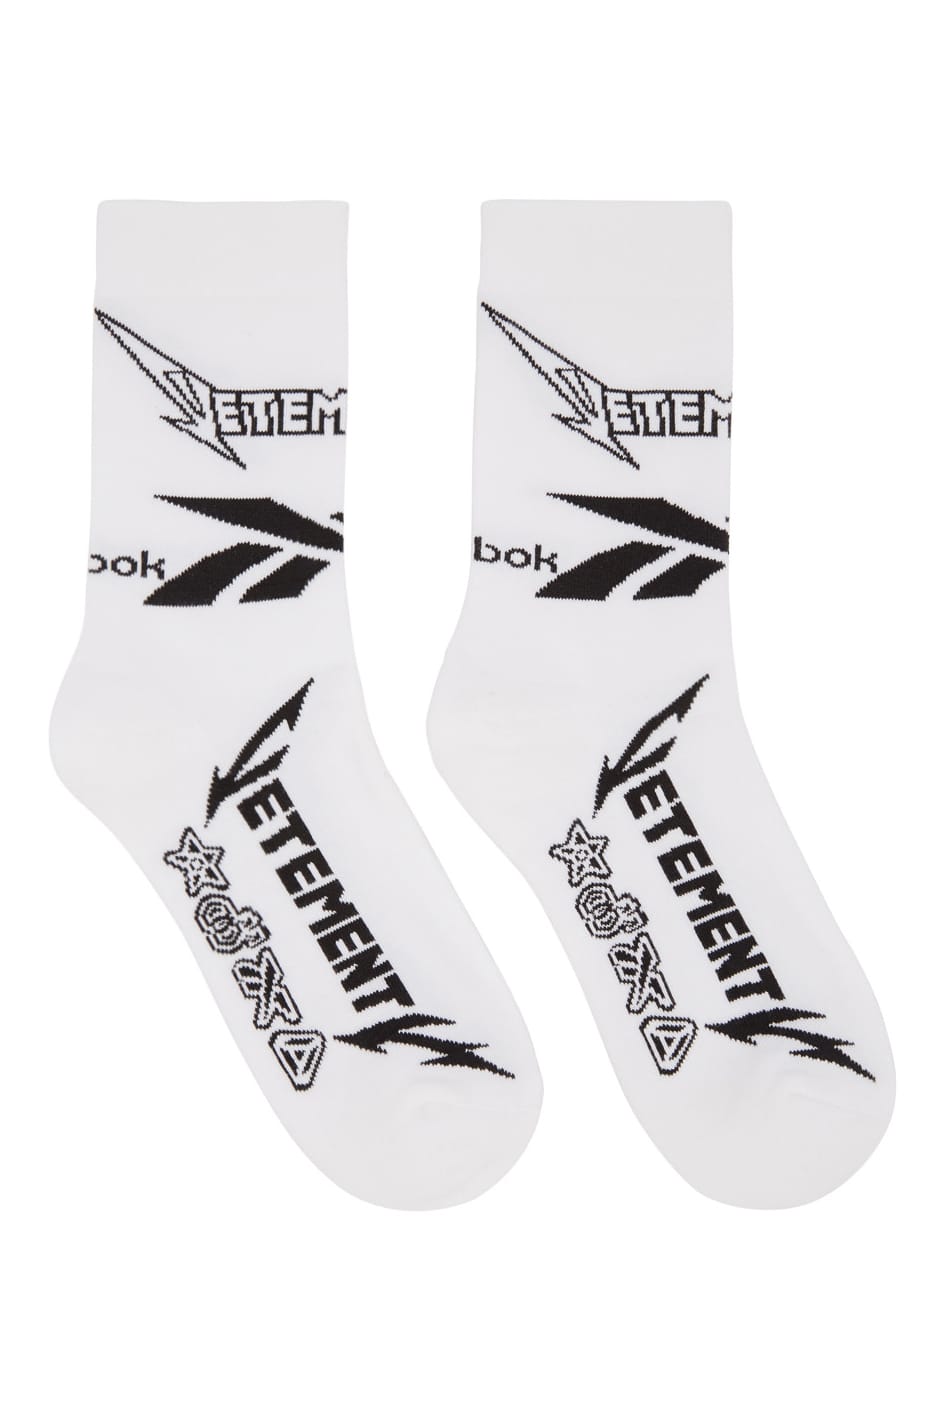 Vetements x Reebok Release Sock Collection | HYPEBEAST